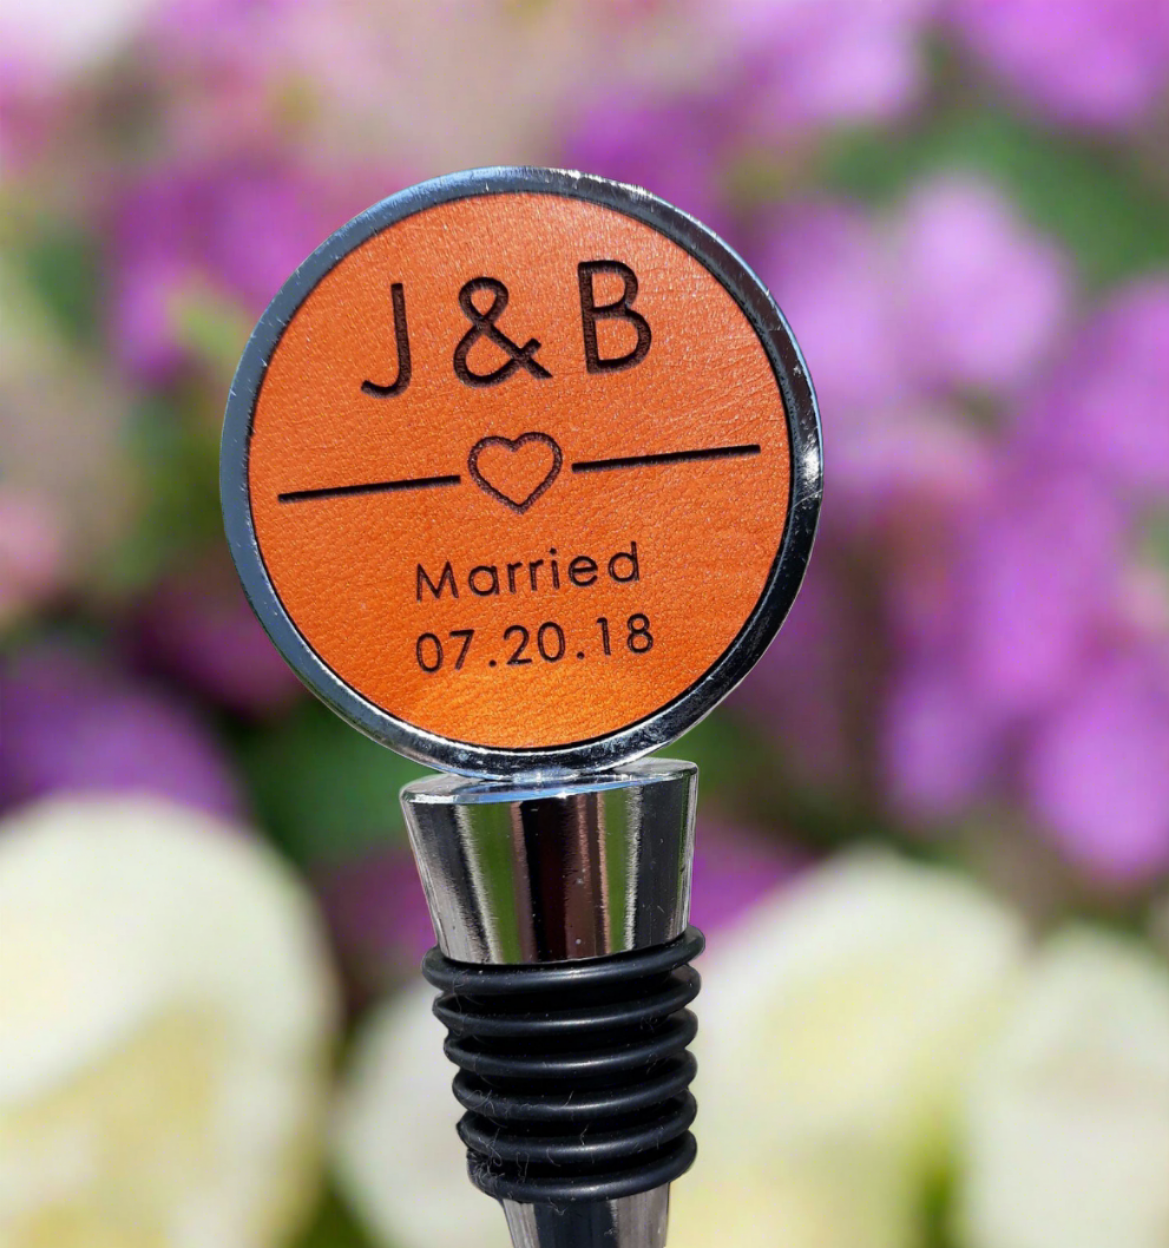 Wedding date Wine bottle Stopper - personalized gift